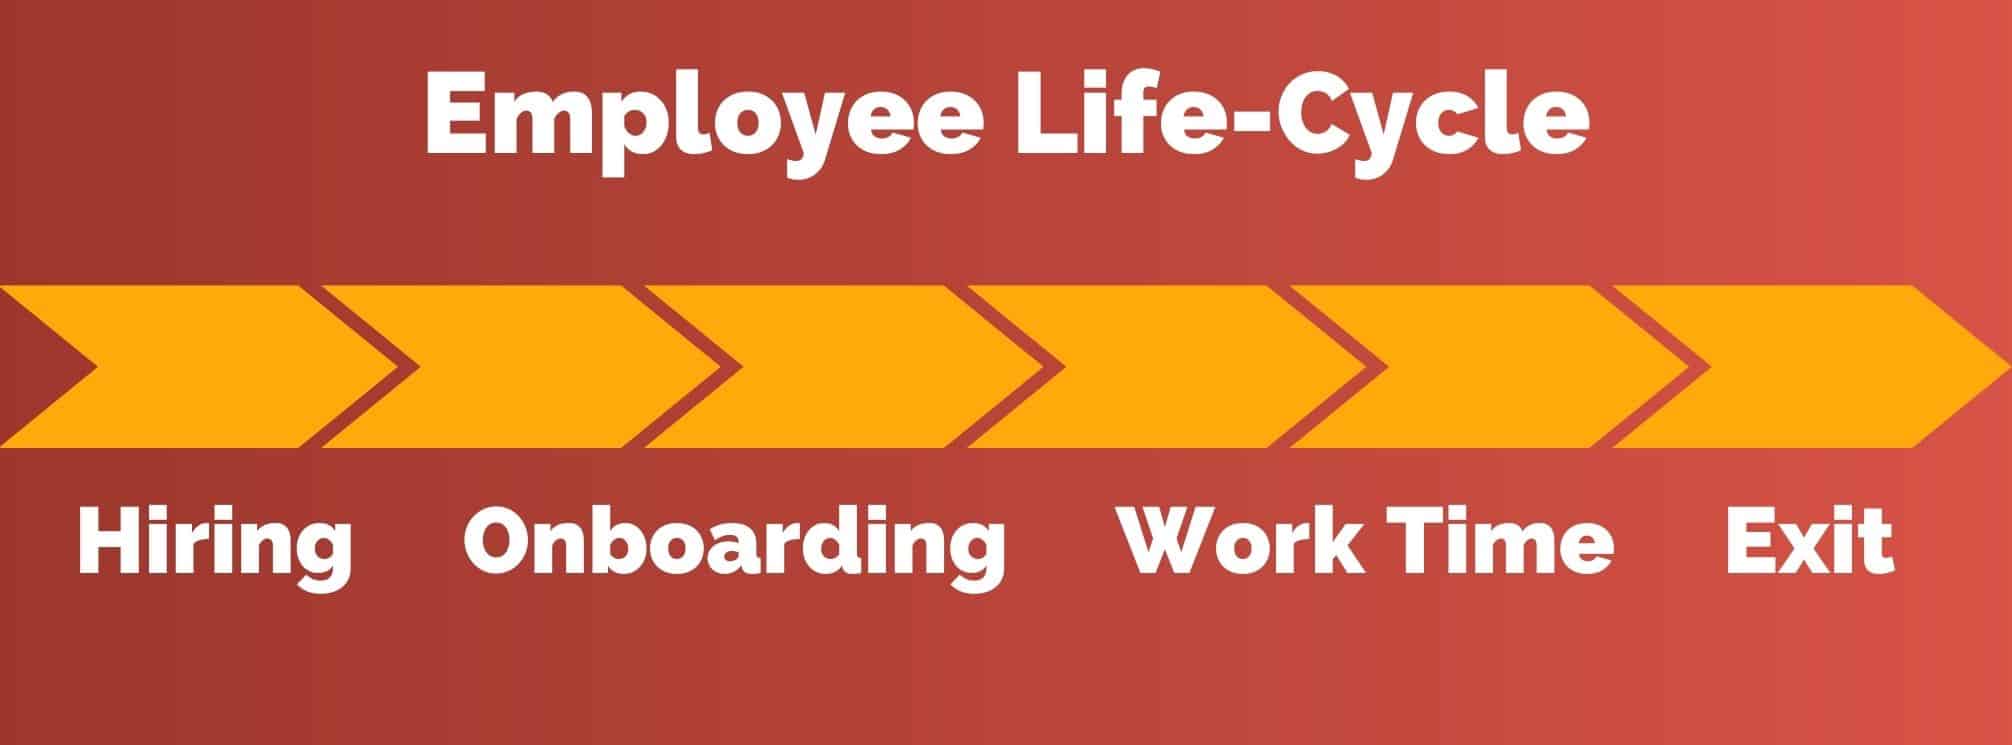 employee lifecycle diagram